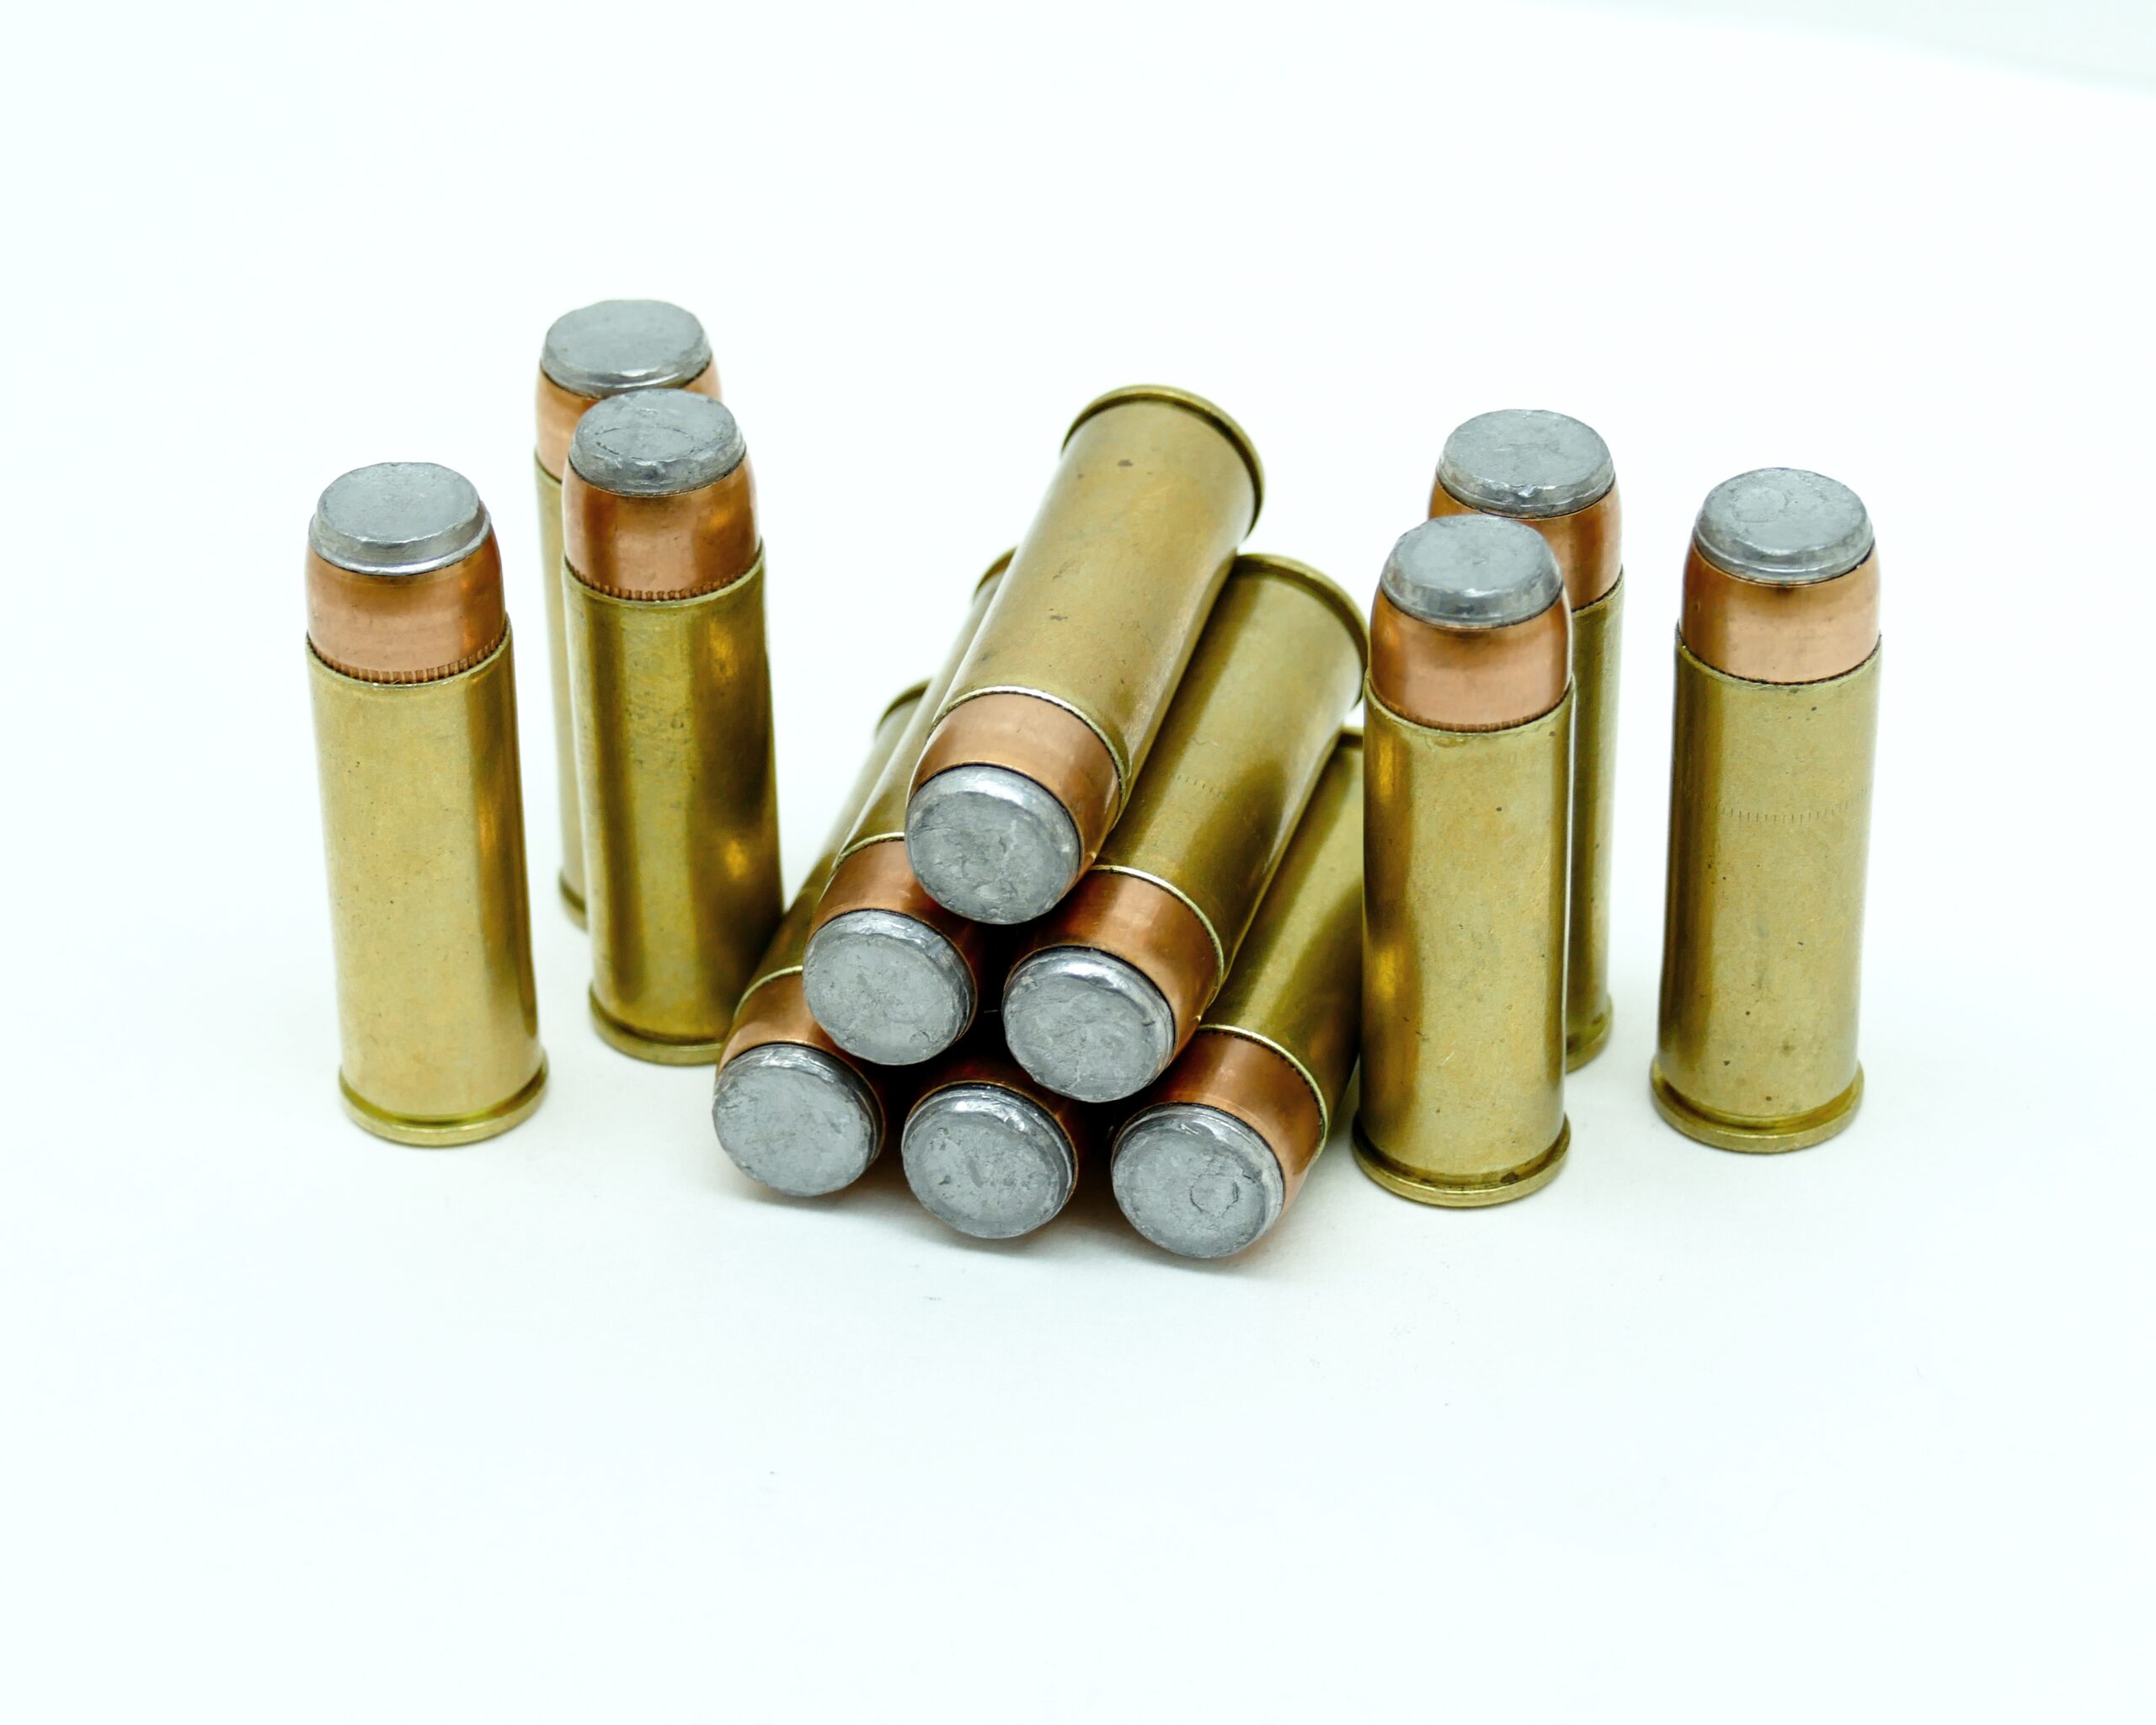 Custom Loaded 44 Magnum Ammunition Save 8 Per Box When You Provide